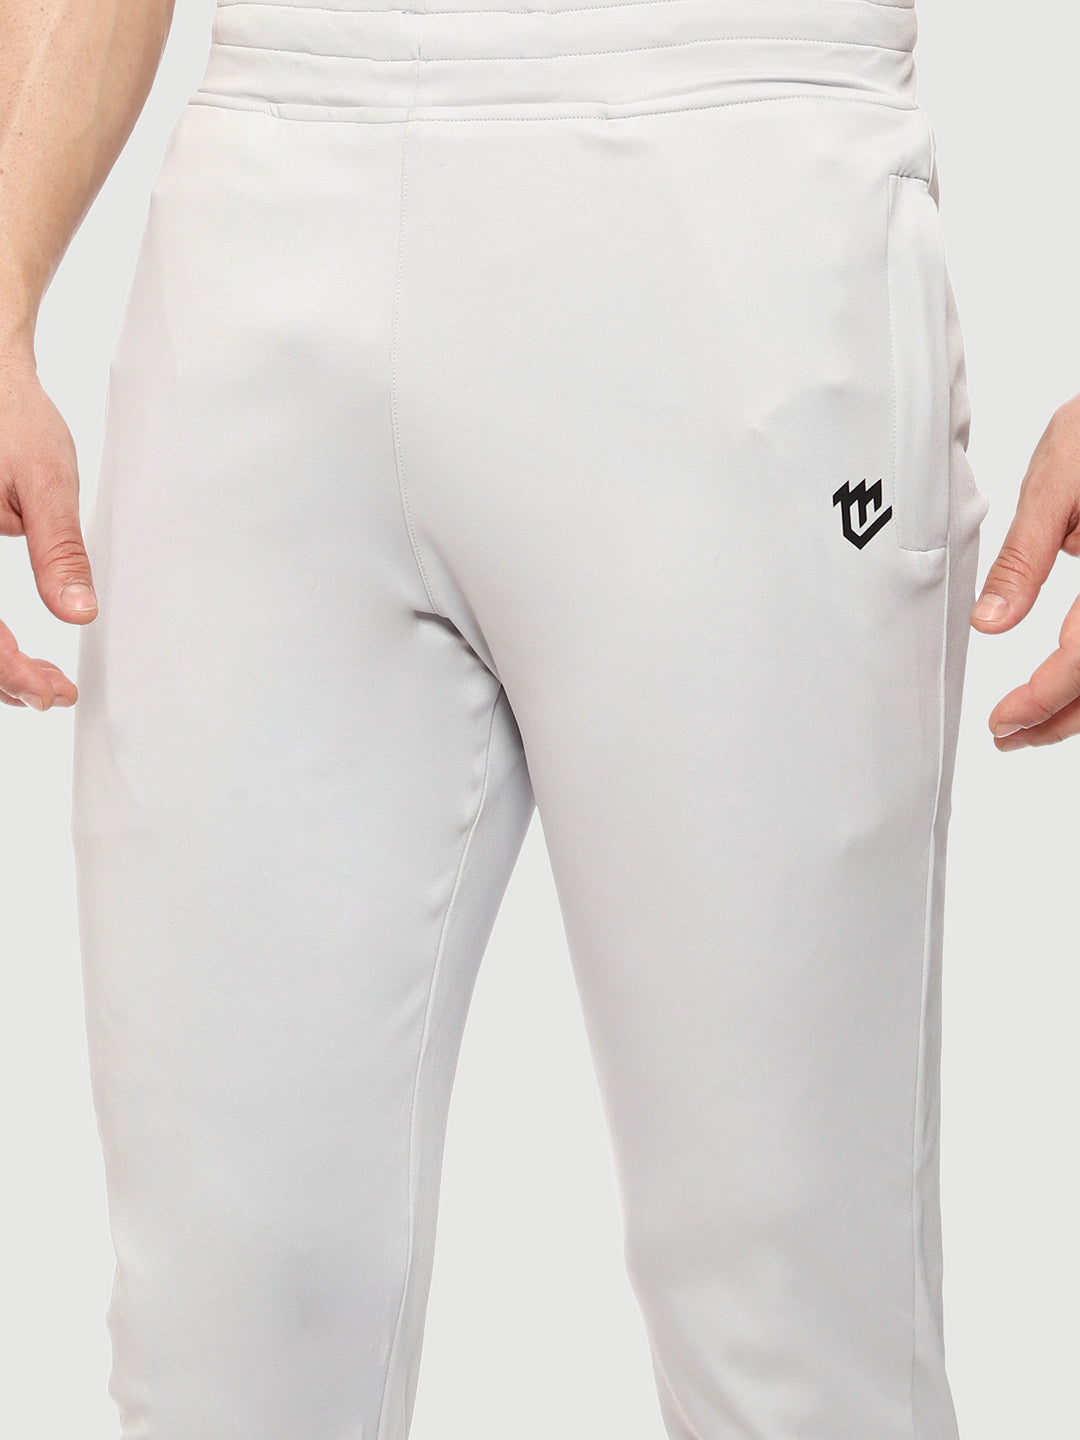 Nike vintage y2k white Cortez 72 cor7e2 track pants | eBay